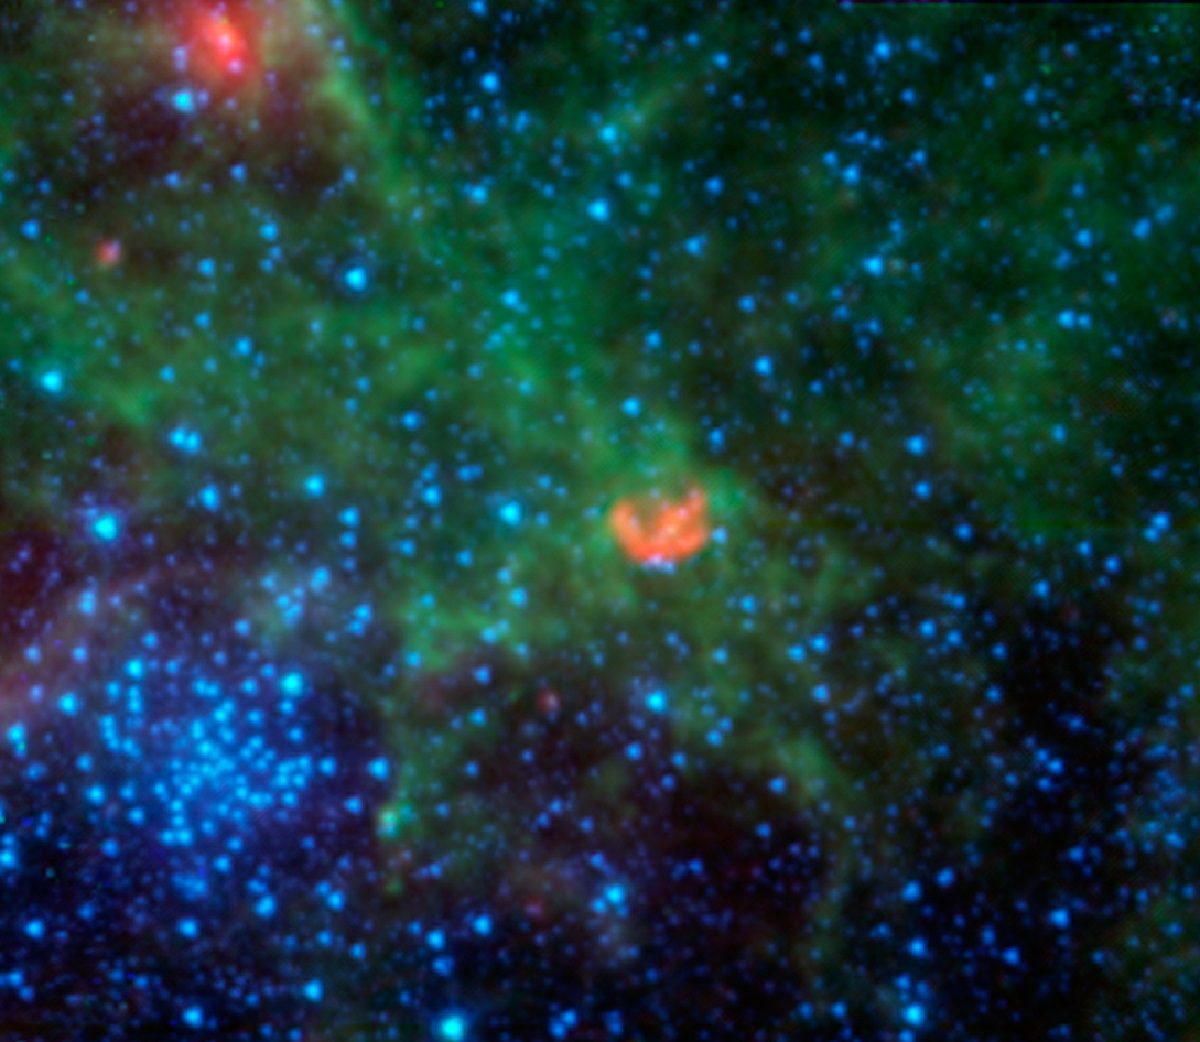 Supernovas can happen in different ways - NASA photos on Silver Magazine www.silvermagazine.co.uk